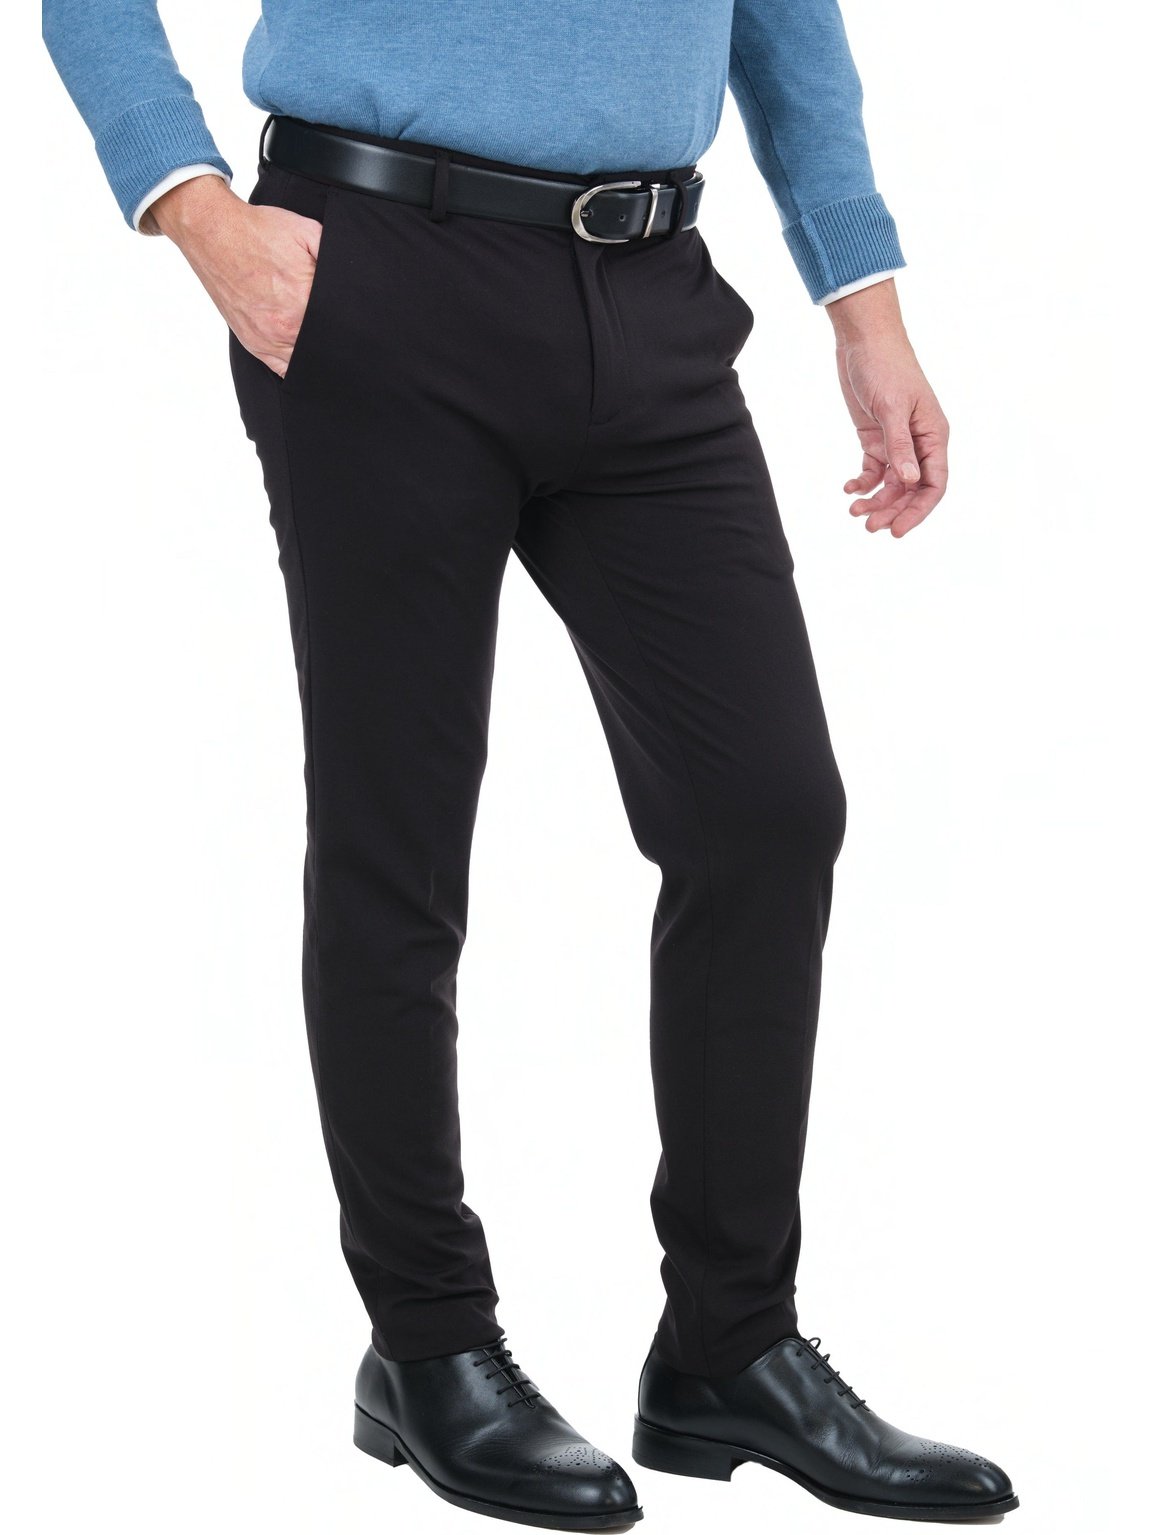 Buy Latest Slim Fit Black Trousers for Men – Rockstar Jeans